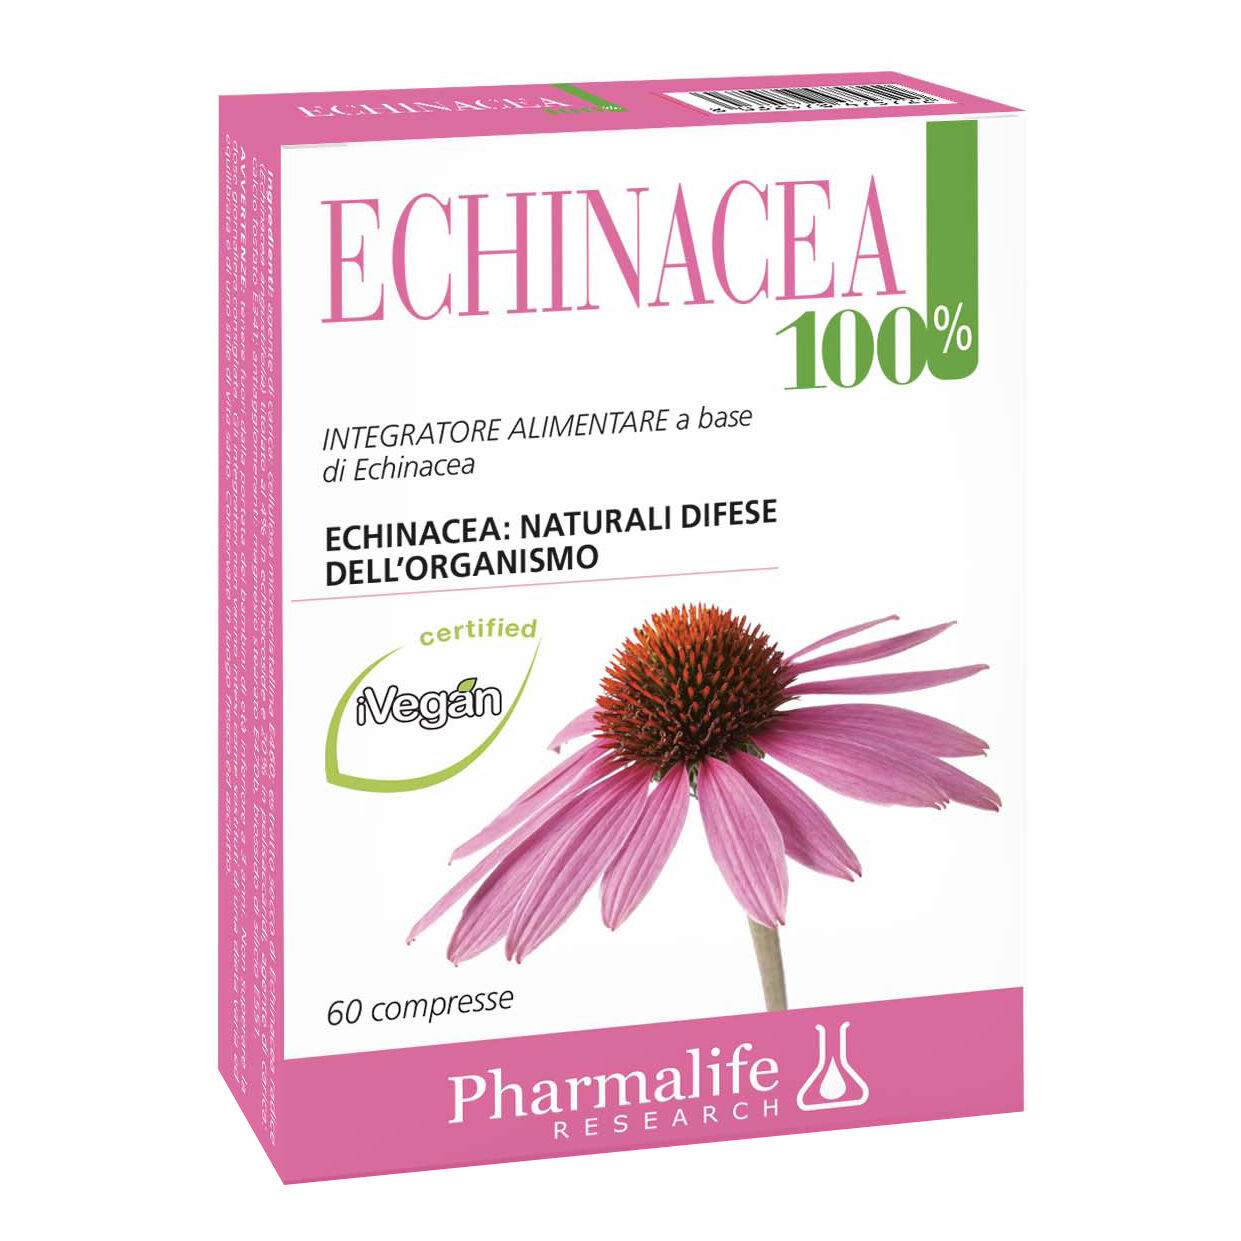 PHARMALIFE RESEARCH Srl Echinacea 100% 60 compresse